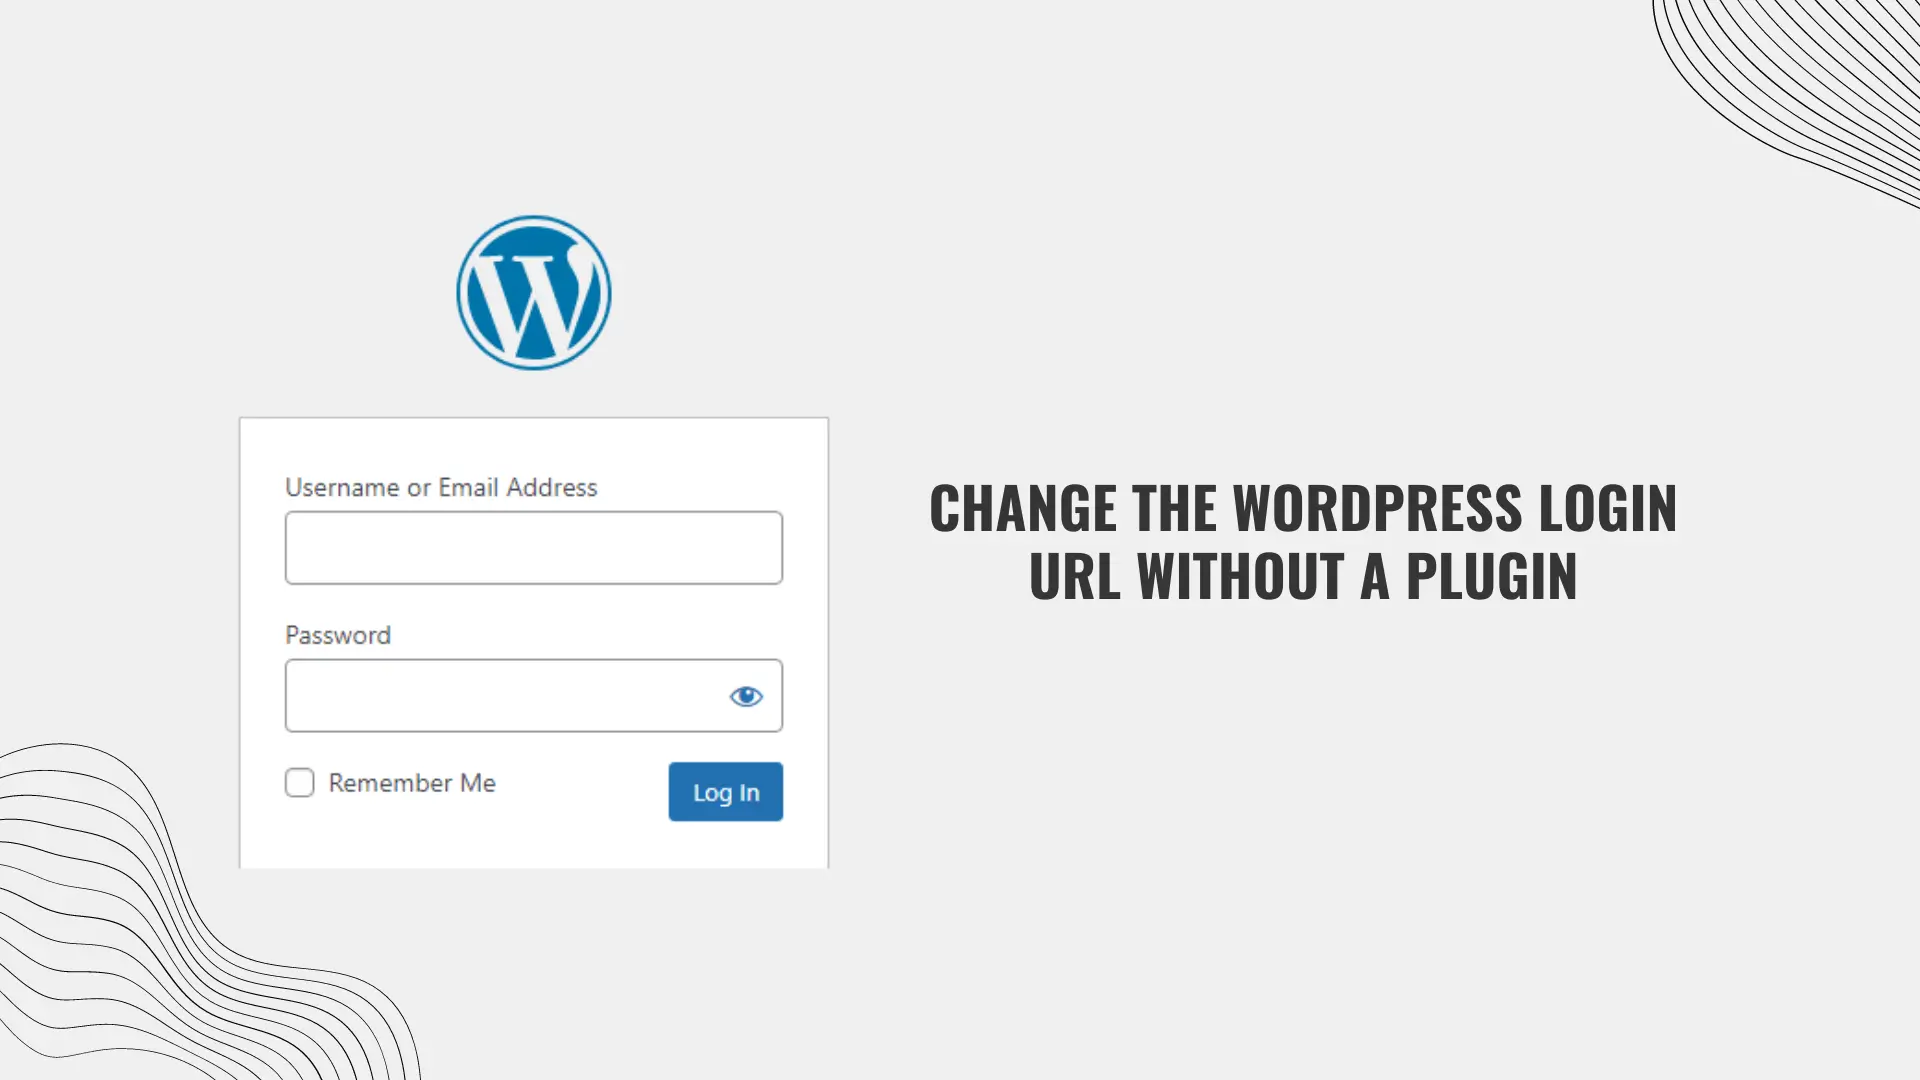 Change the WordPress Login URL Without a Plugin